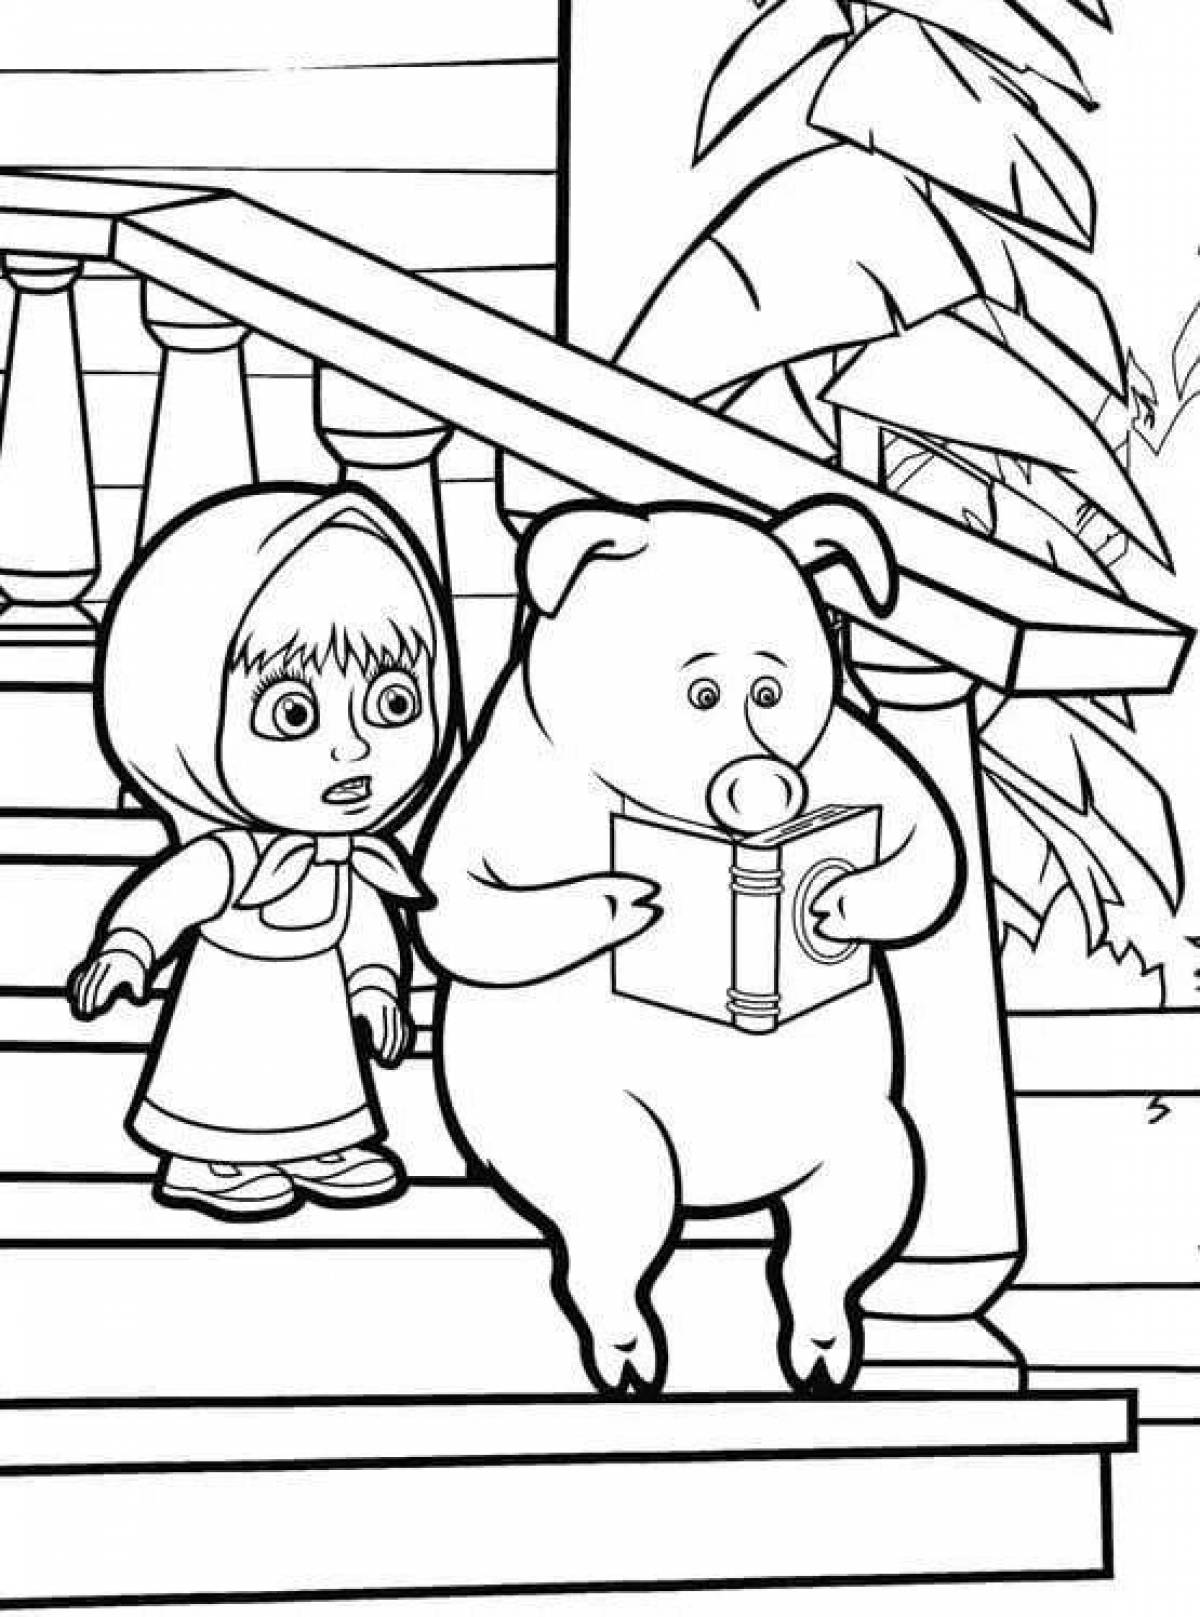 Bright Masha and the bear coloring book